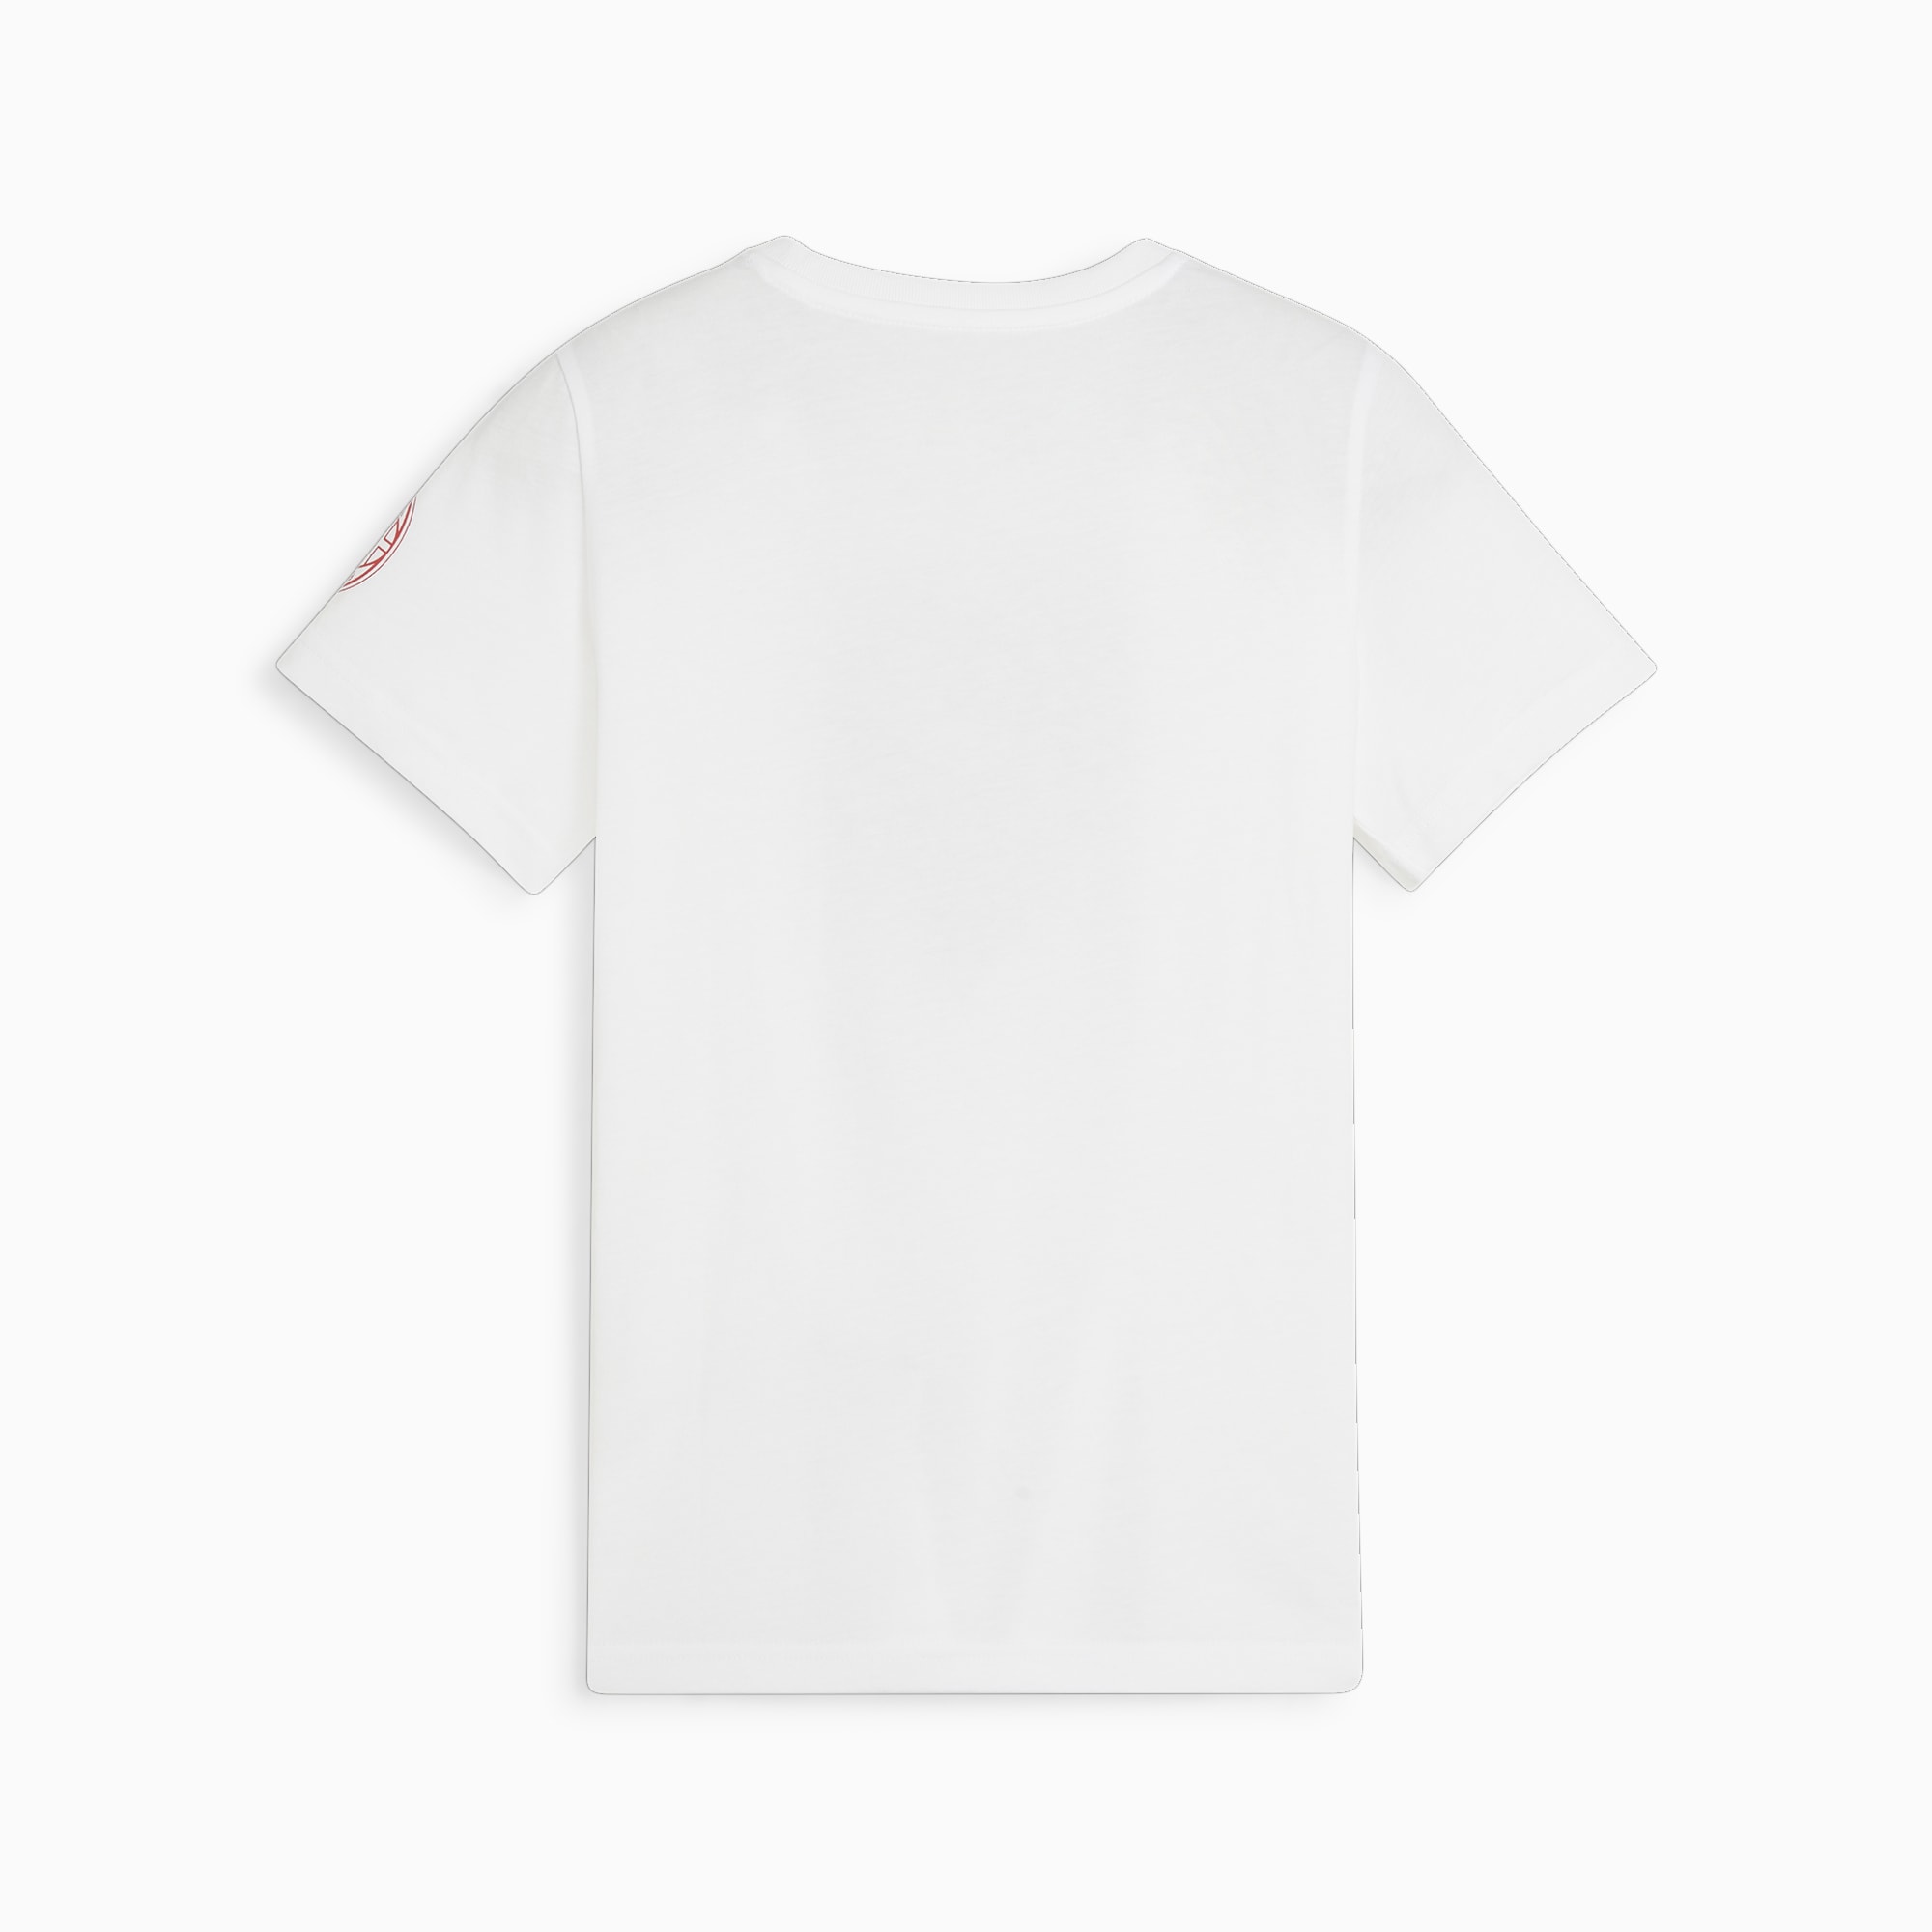 PUMA AC Milan Ftblicons Youth T-Shirt, White, Size 140, Clothing